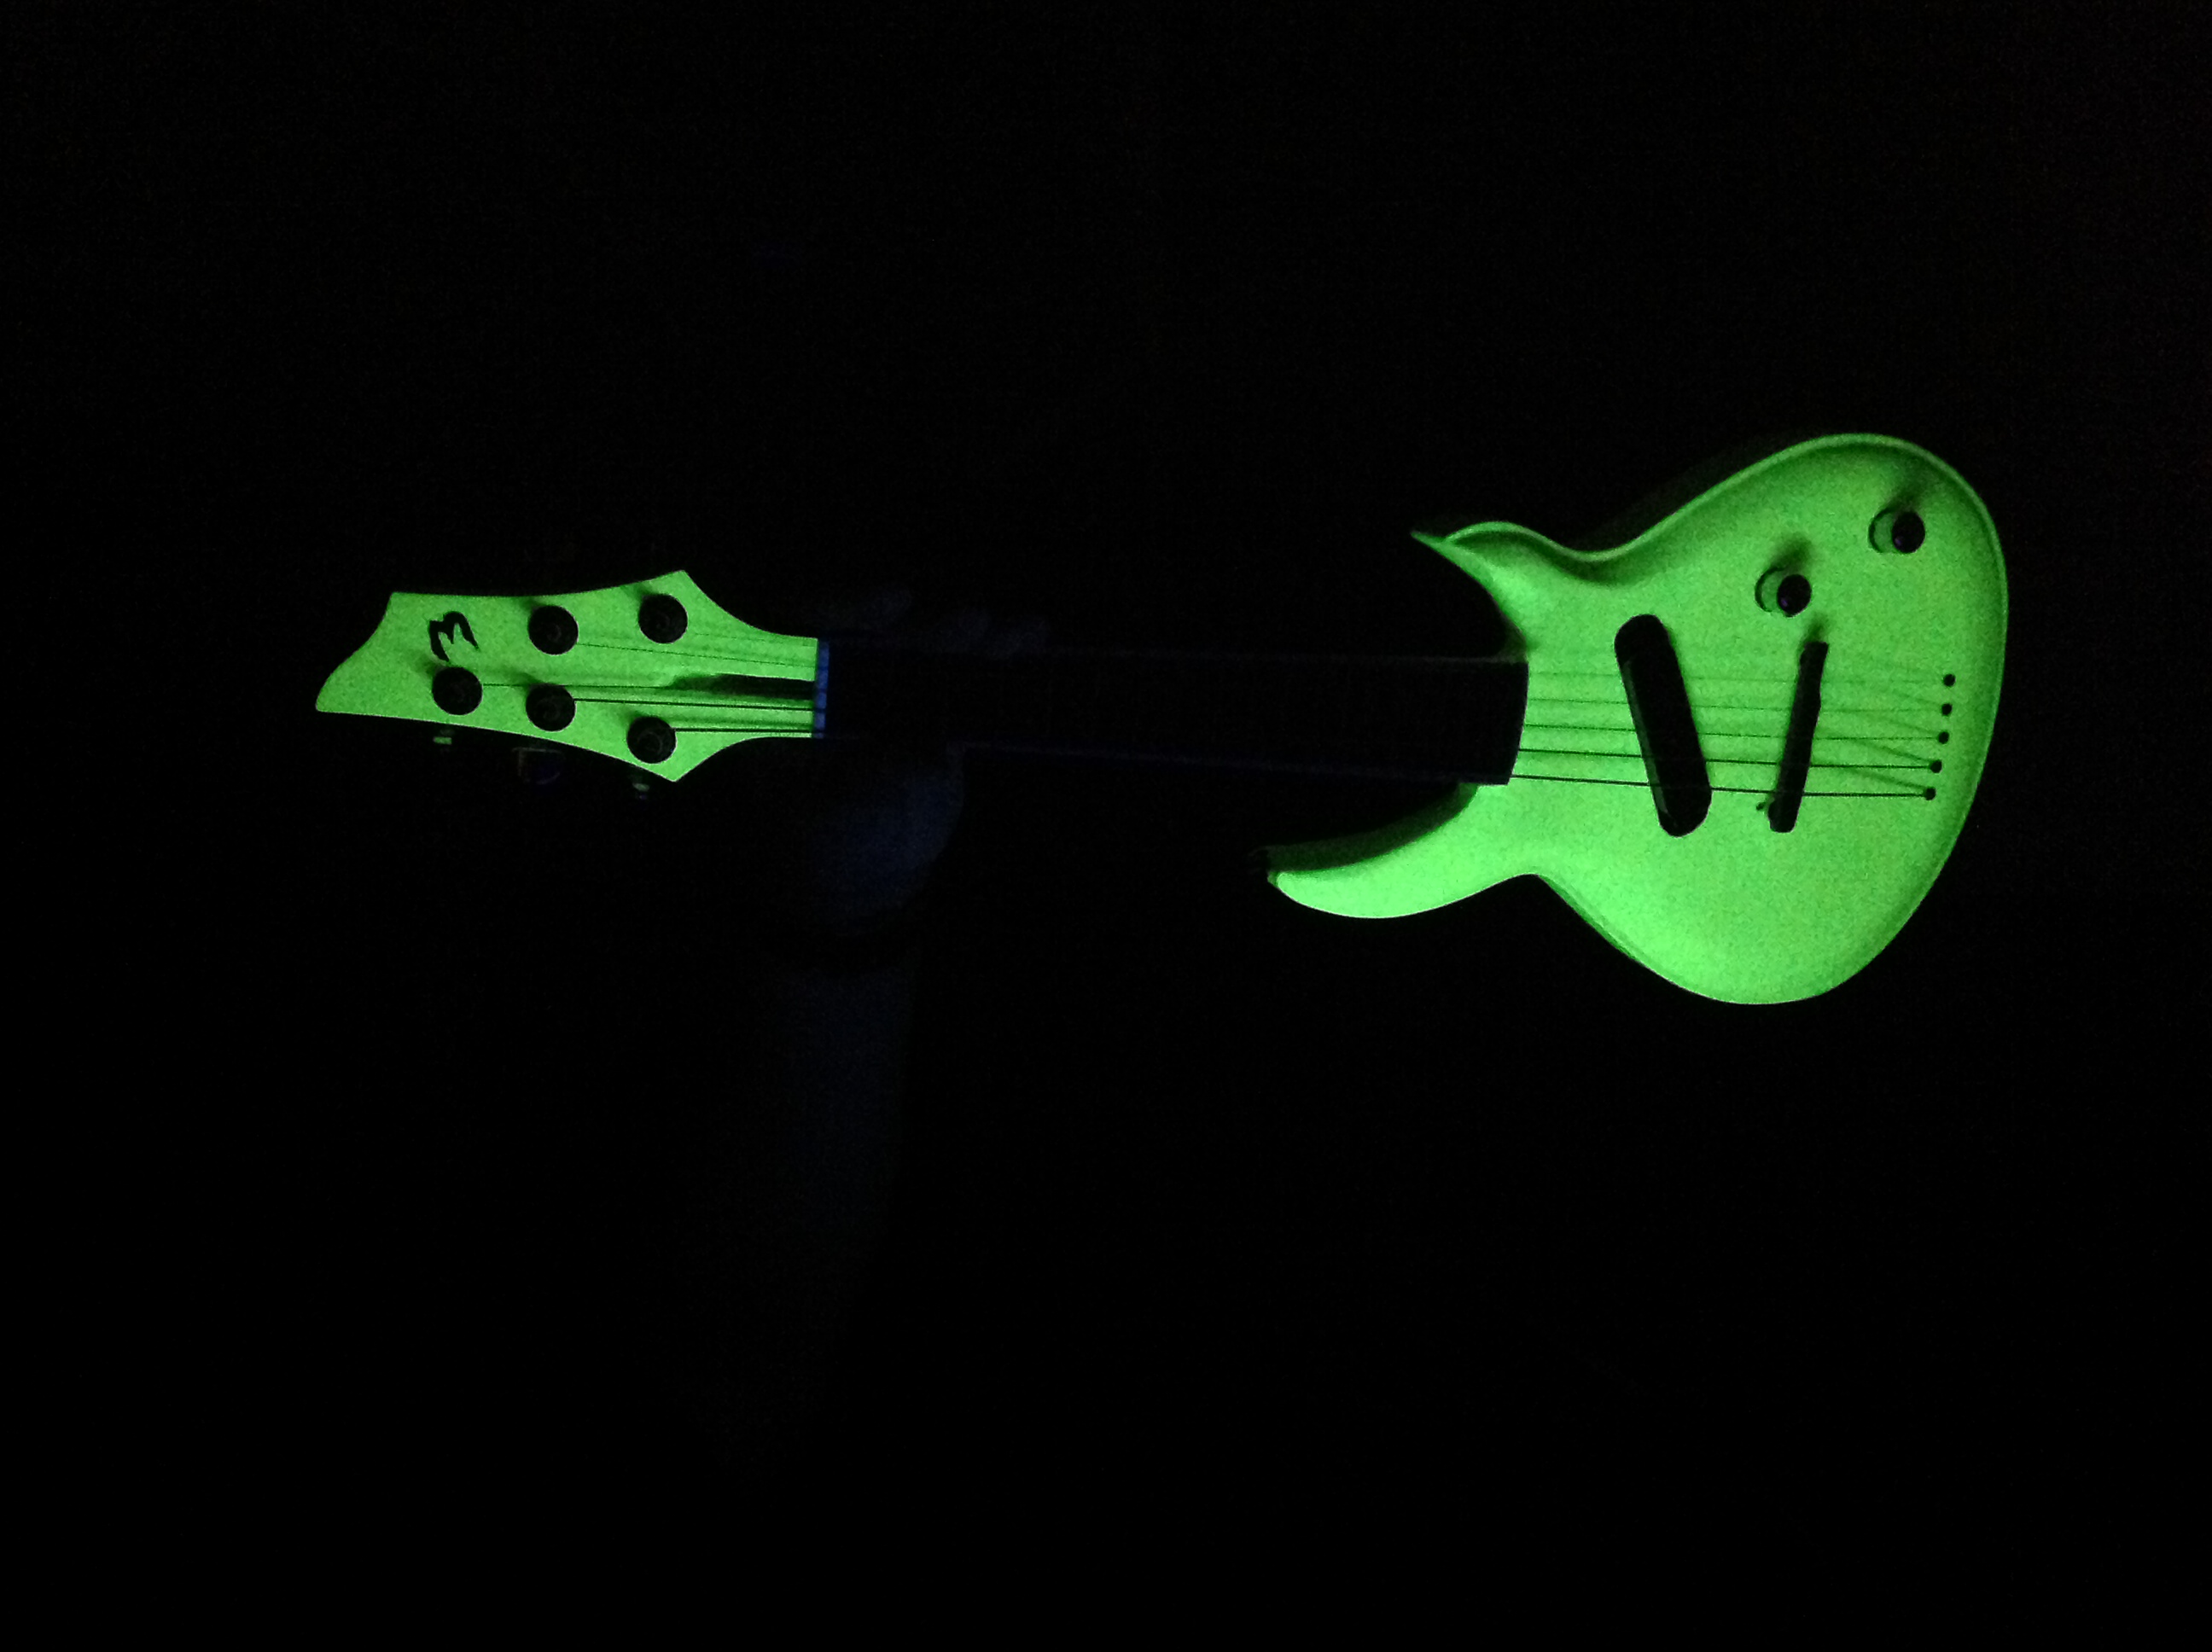 Profile view of a glow in the dark mandolin - guitar